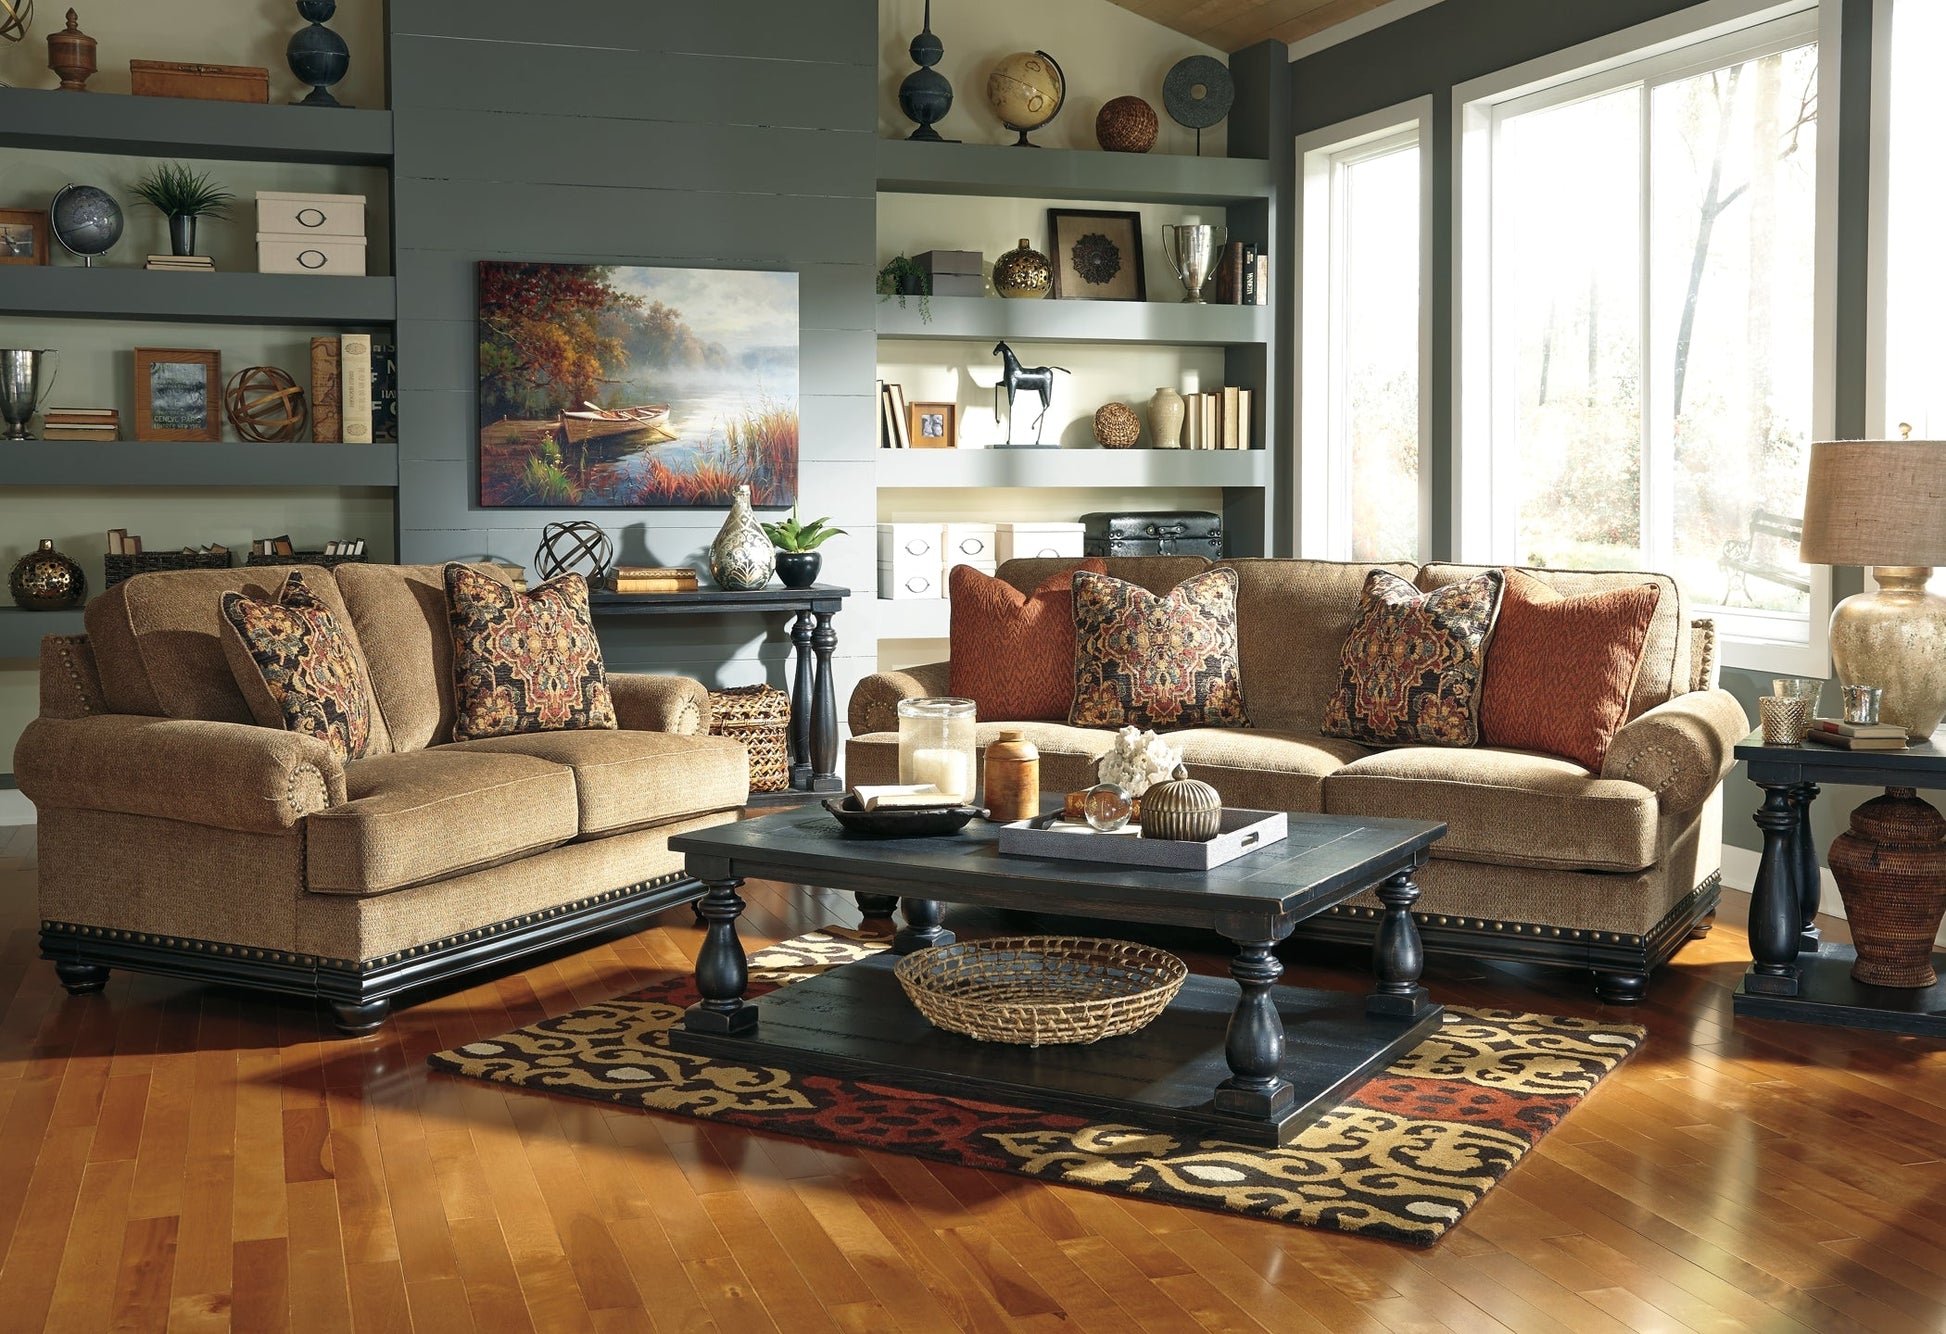 Mallacar Sofa Table at Cloud 9 Mattress & Furniture furniture, home furnishing, home decor